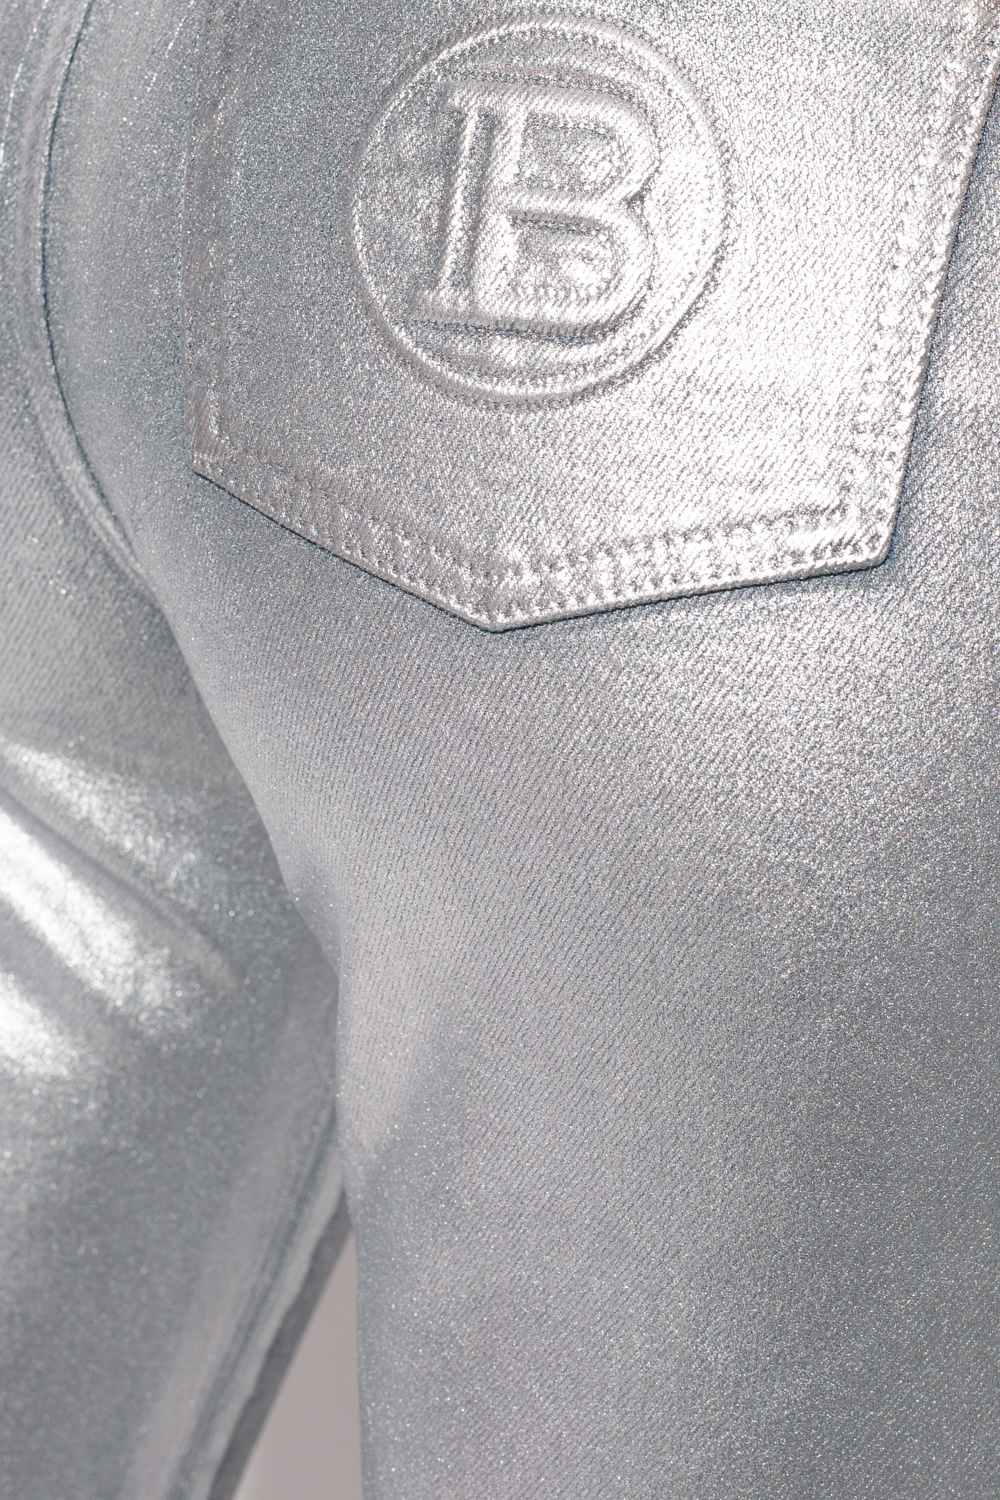 Balmain swimsuit balmain embroidered logo denim jacket